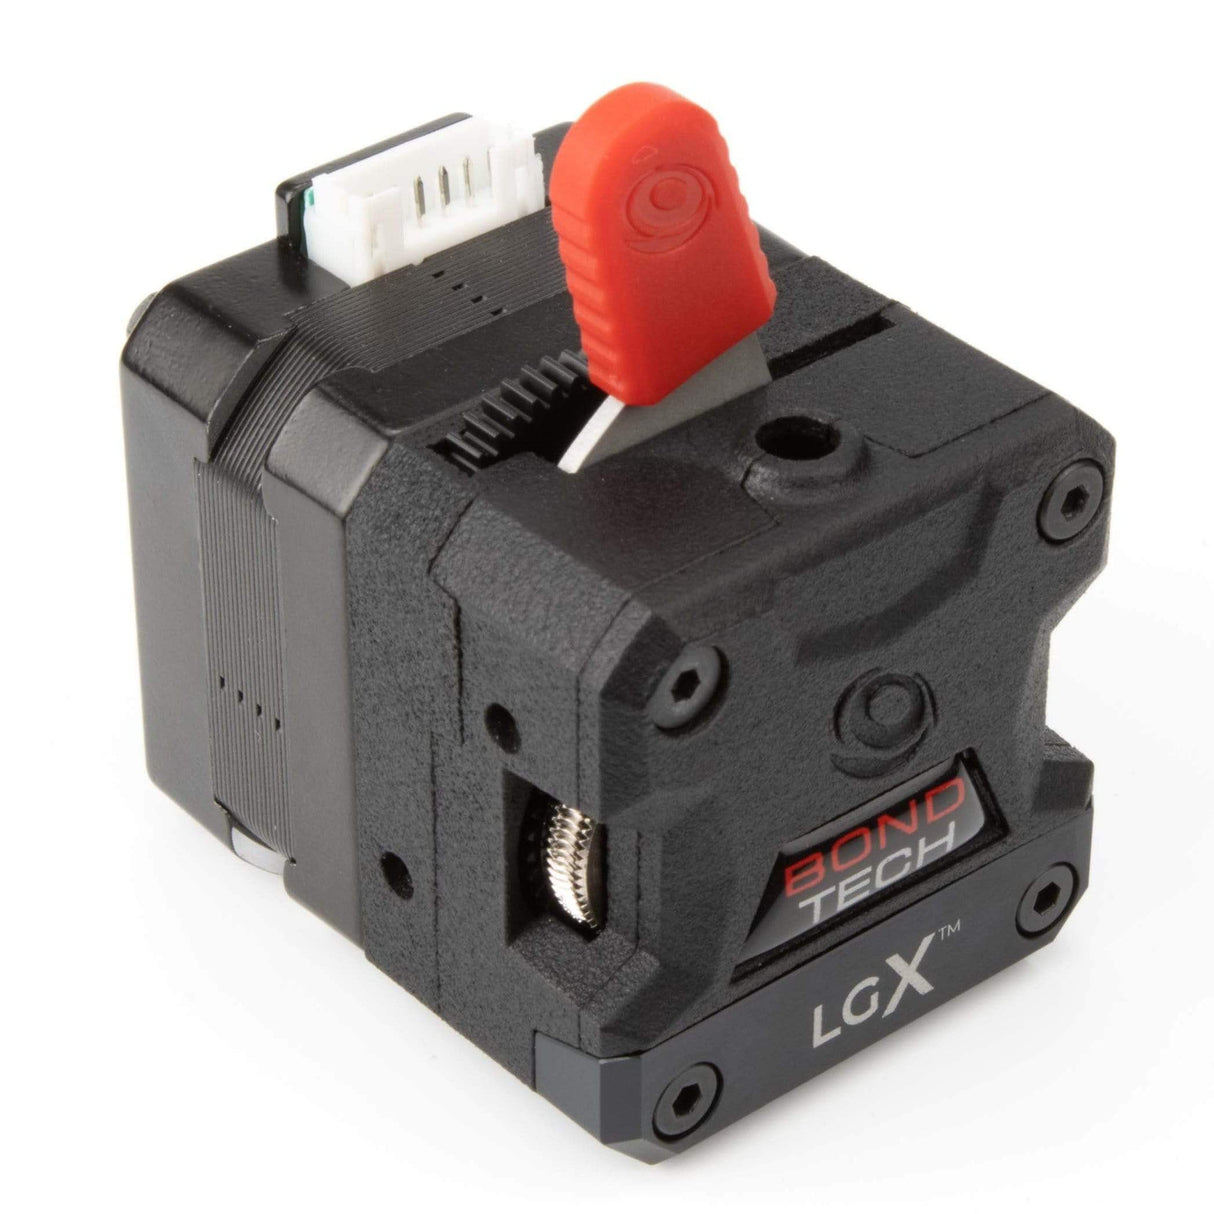 Bondtech Printer Parts Bondtech LGX Direct Drive Interface Plug